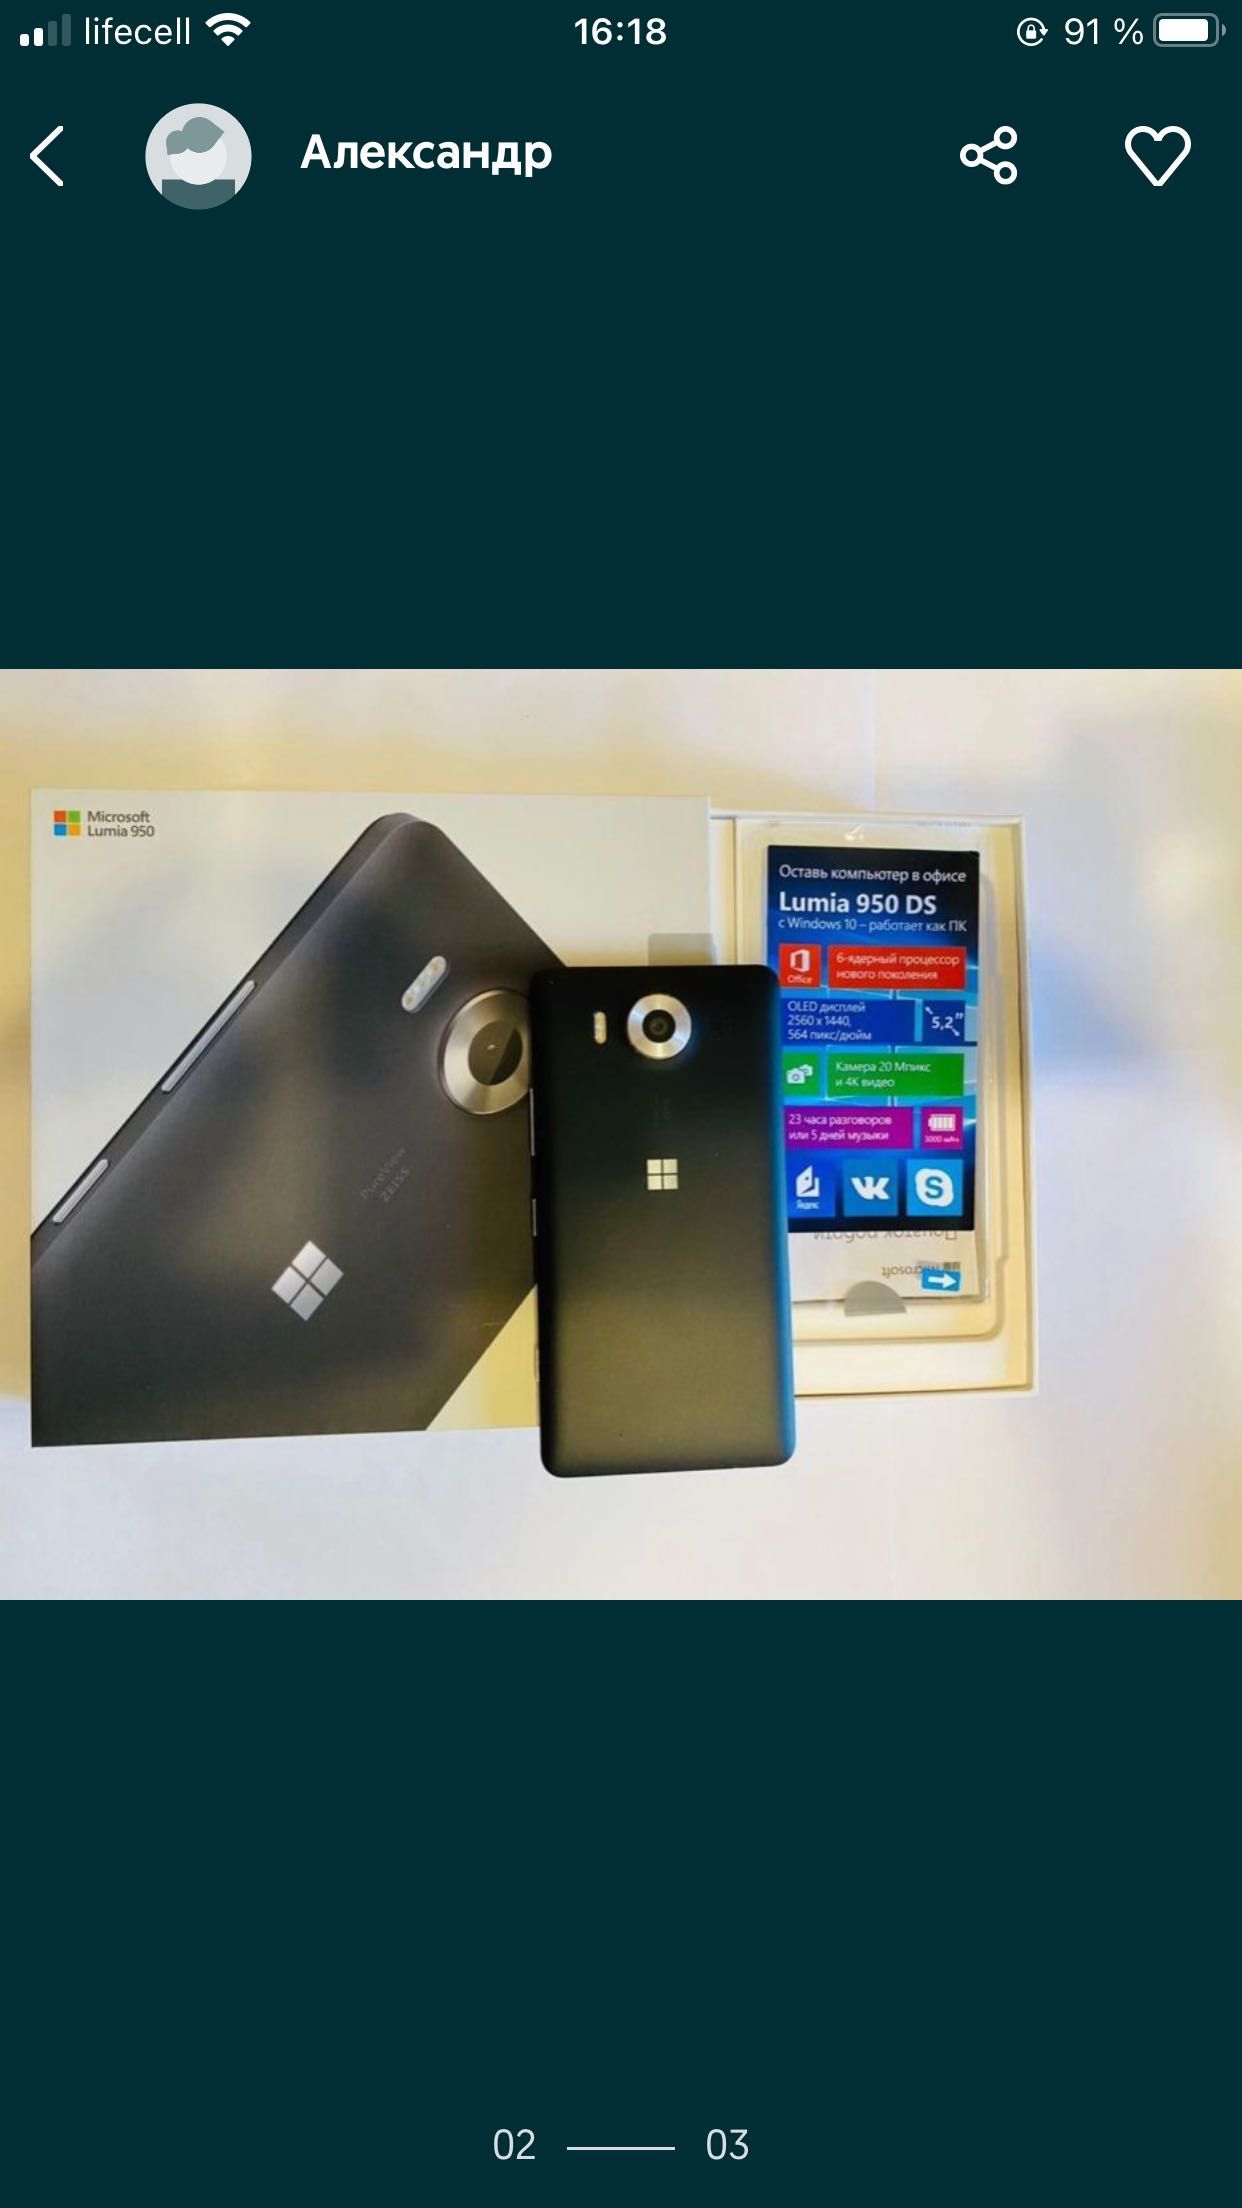 Microsoft lumia 950 DC